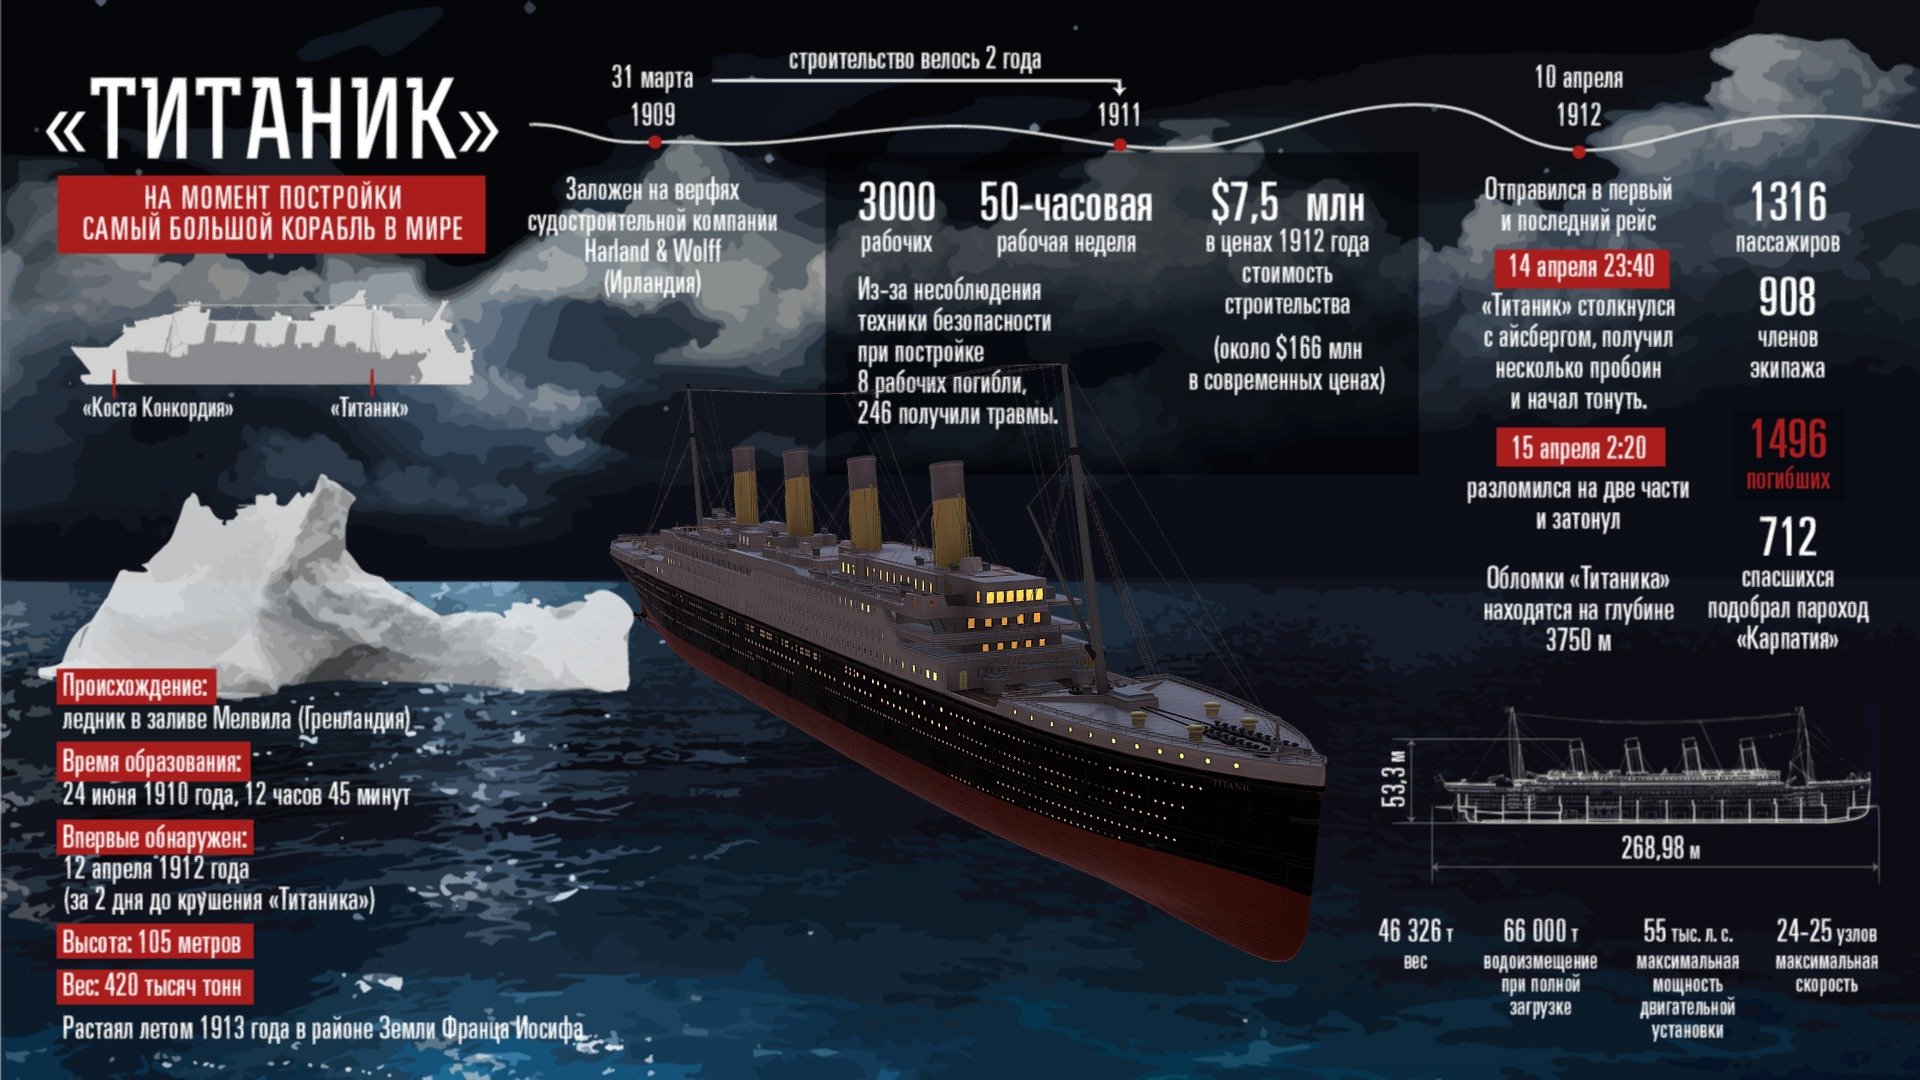 3d Titanic - 3D model by IZ.RU 3d model